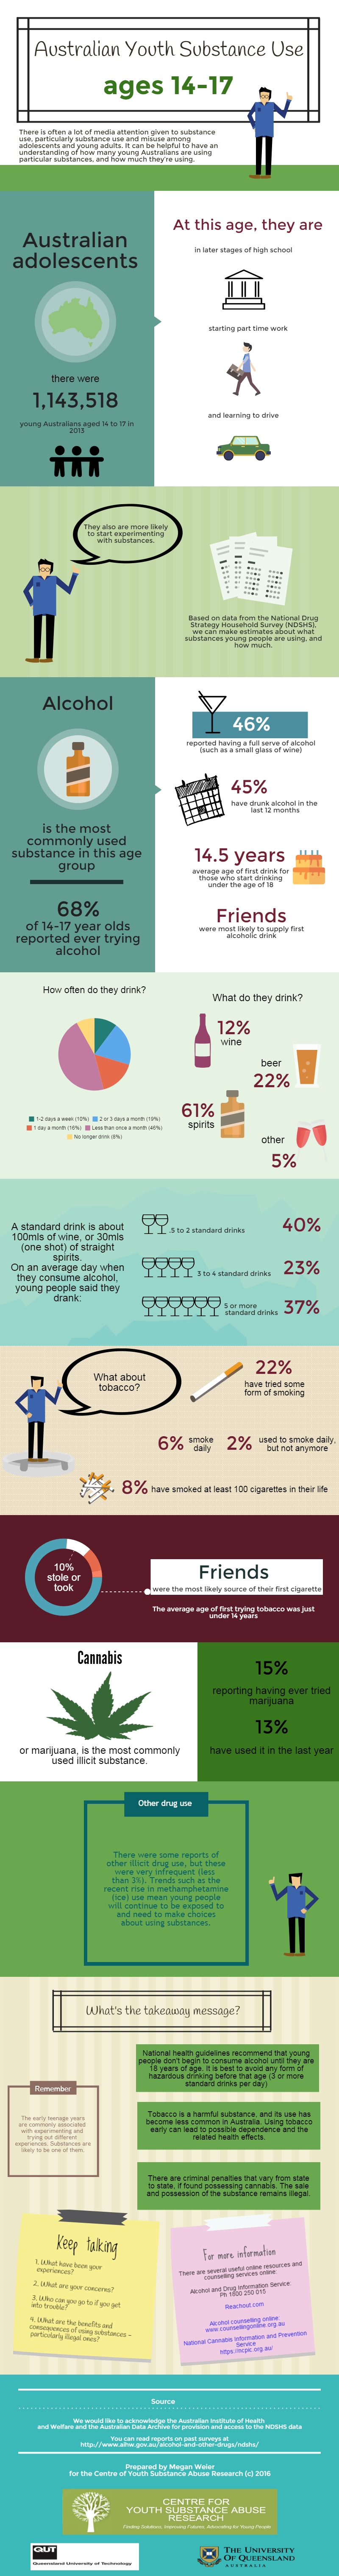 CYSAR drug use infographic